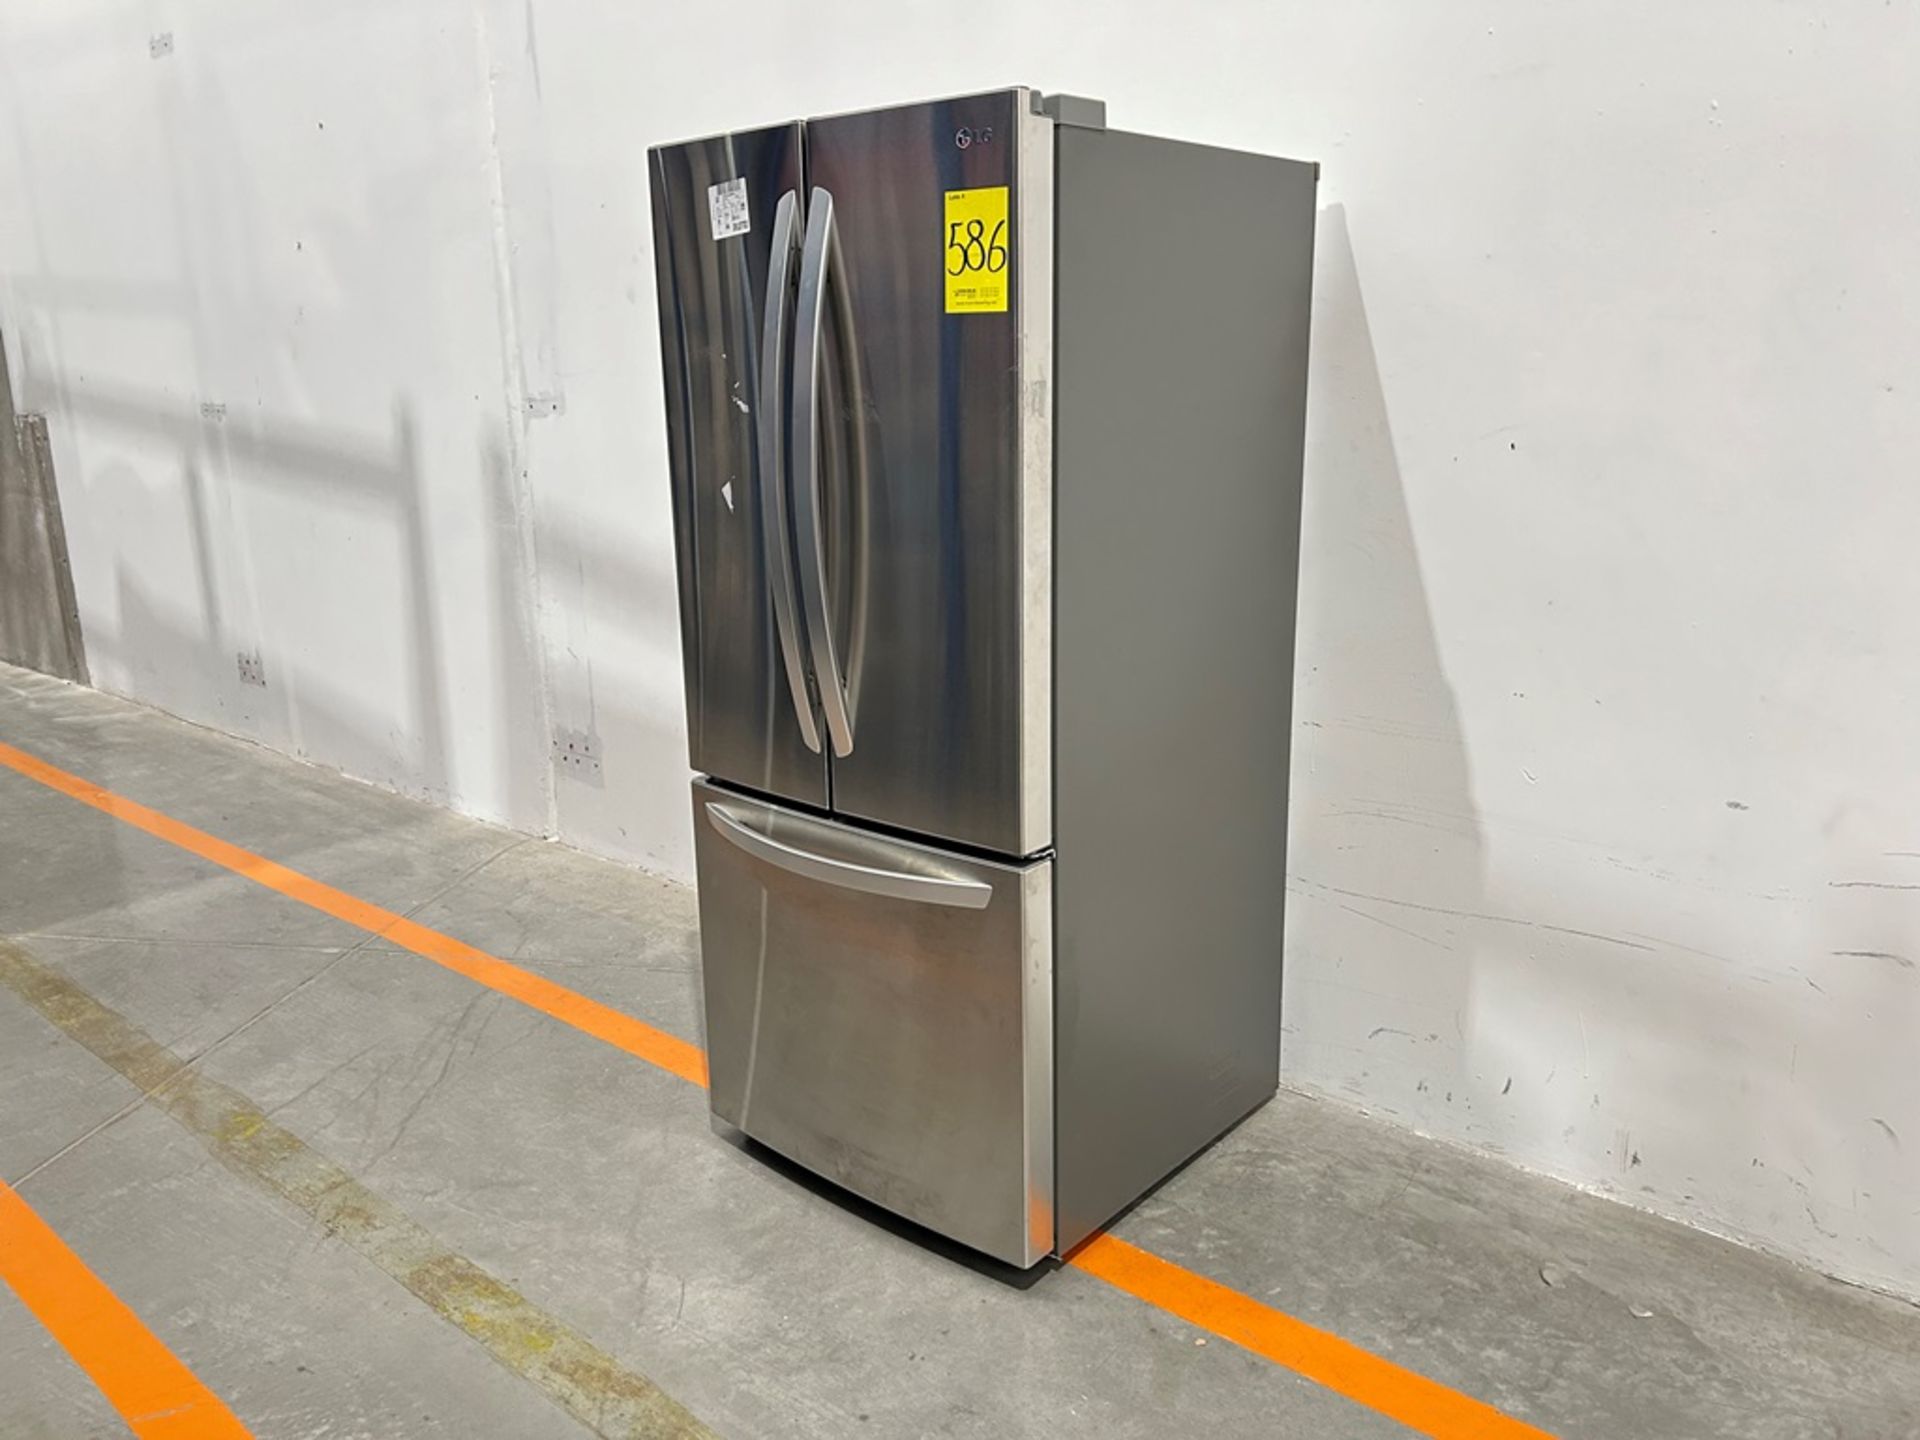 Refrigerador Marca LG, Modelo GF22BGSK, Serie 49652, Color GRIS (Favor de inspeccionar) - Image 2 of 11